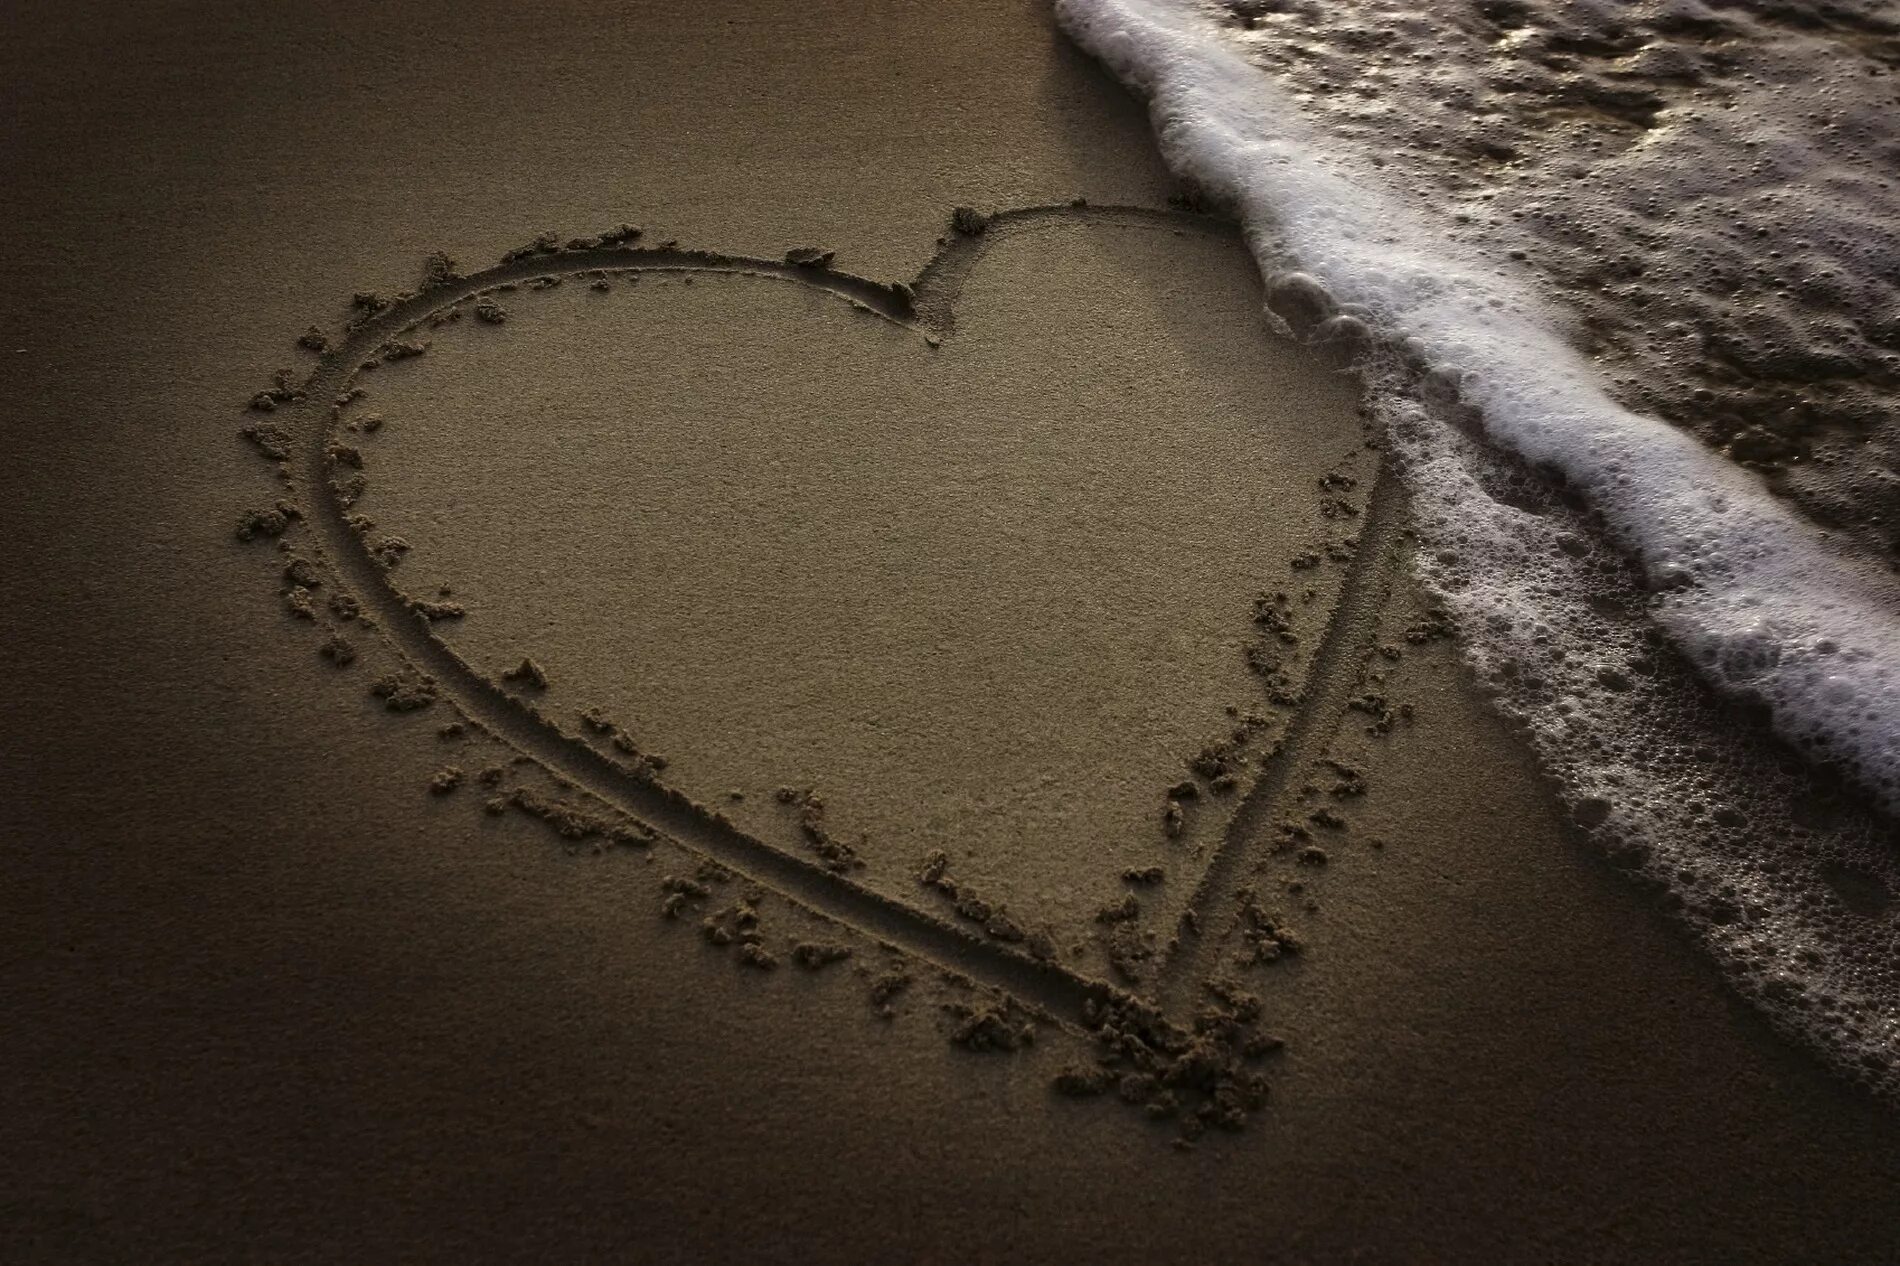 Картинки со. Сердце на песке. Сердечко на песке. Сердце на берегу моря. Романтические надписи на песке.